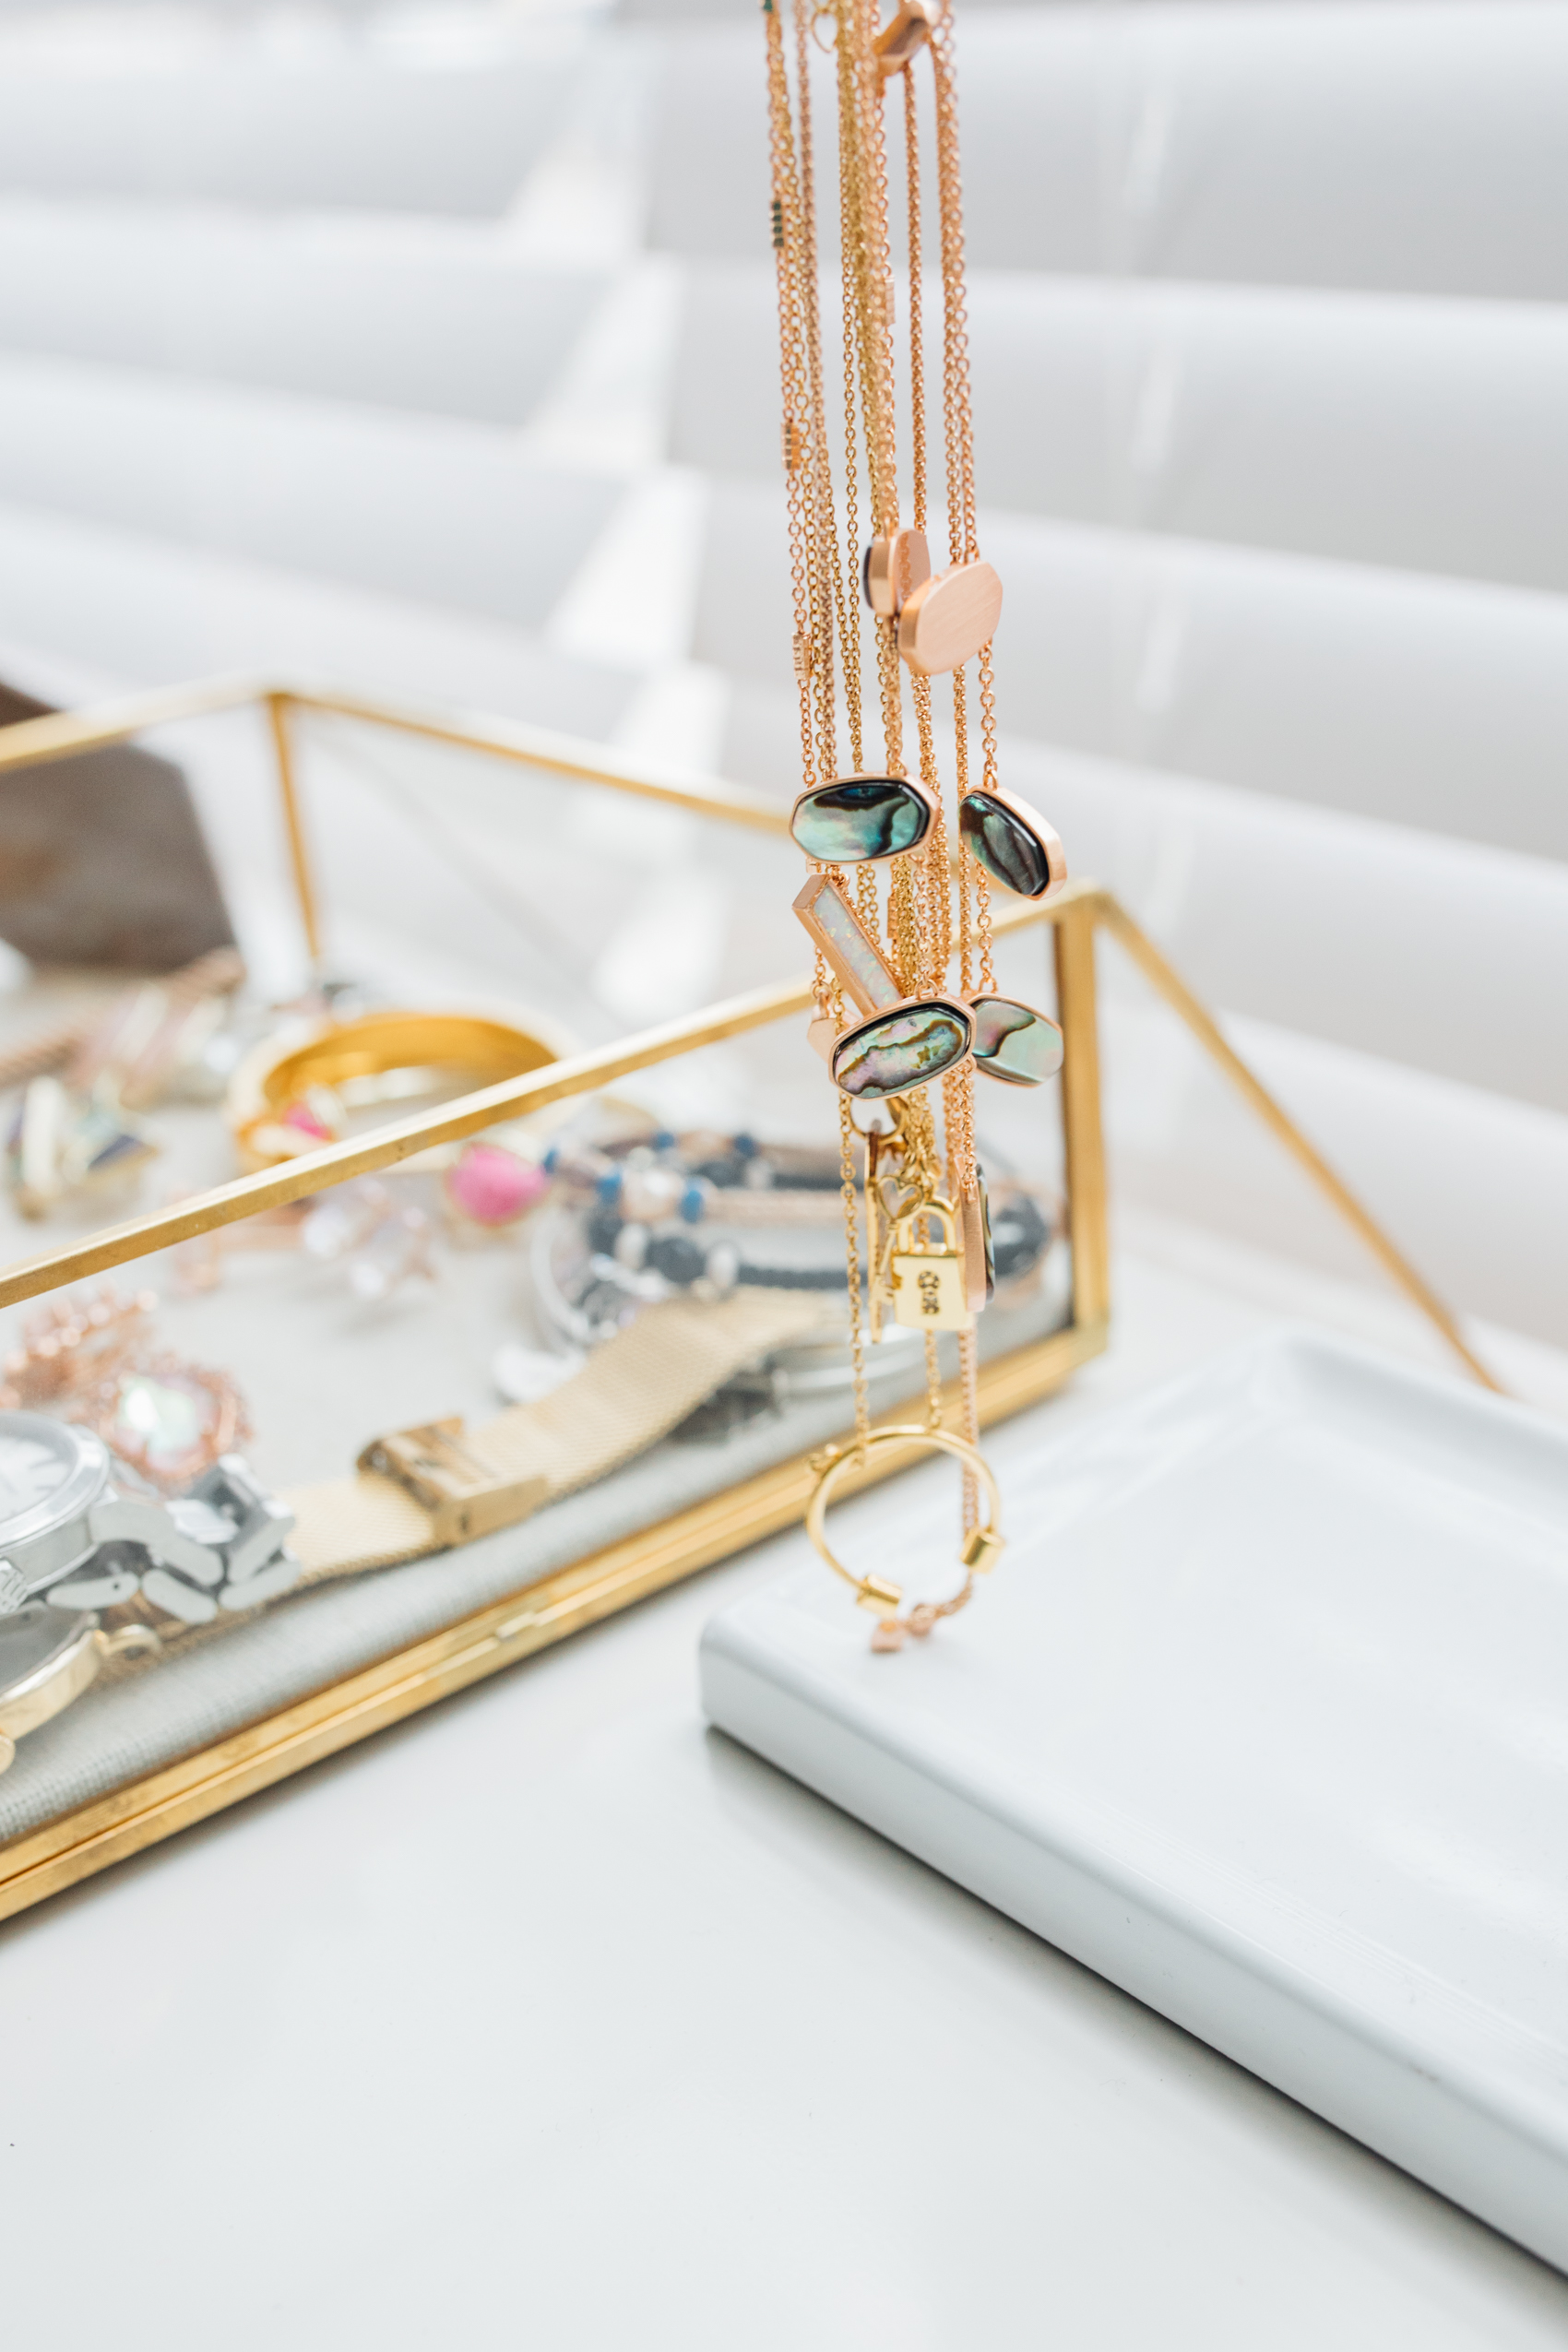 Blogger Hoang-Kim shares her jewelry organization